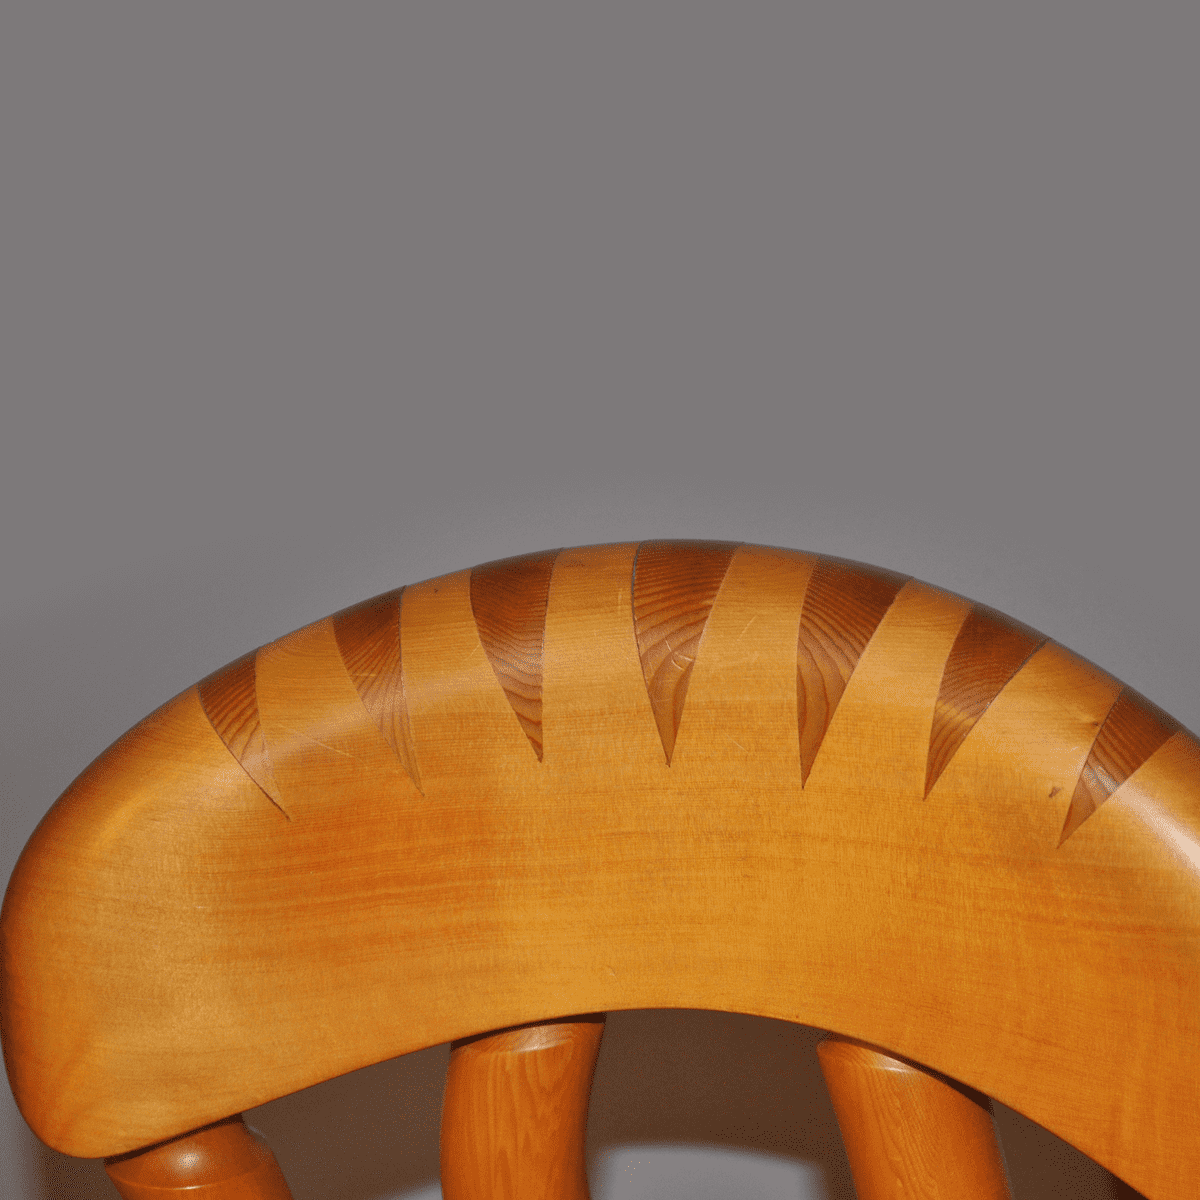 Tiger Chair